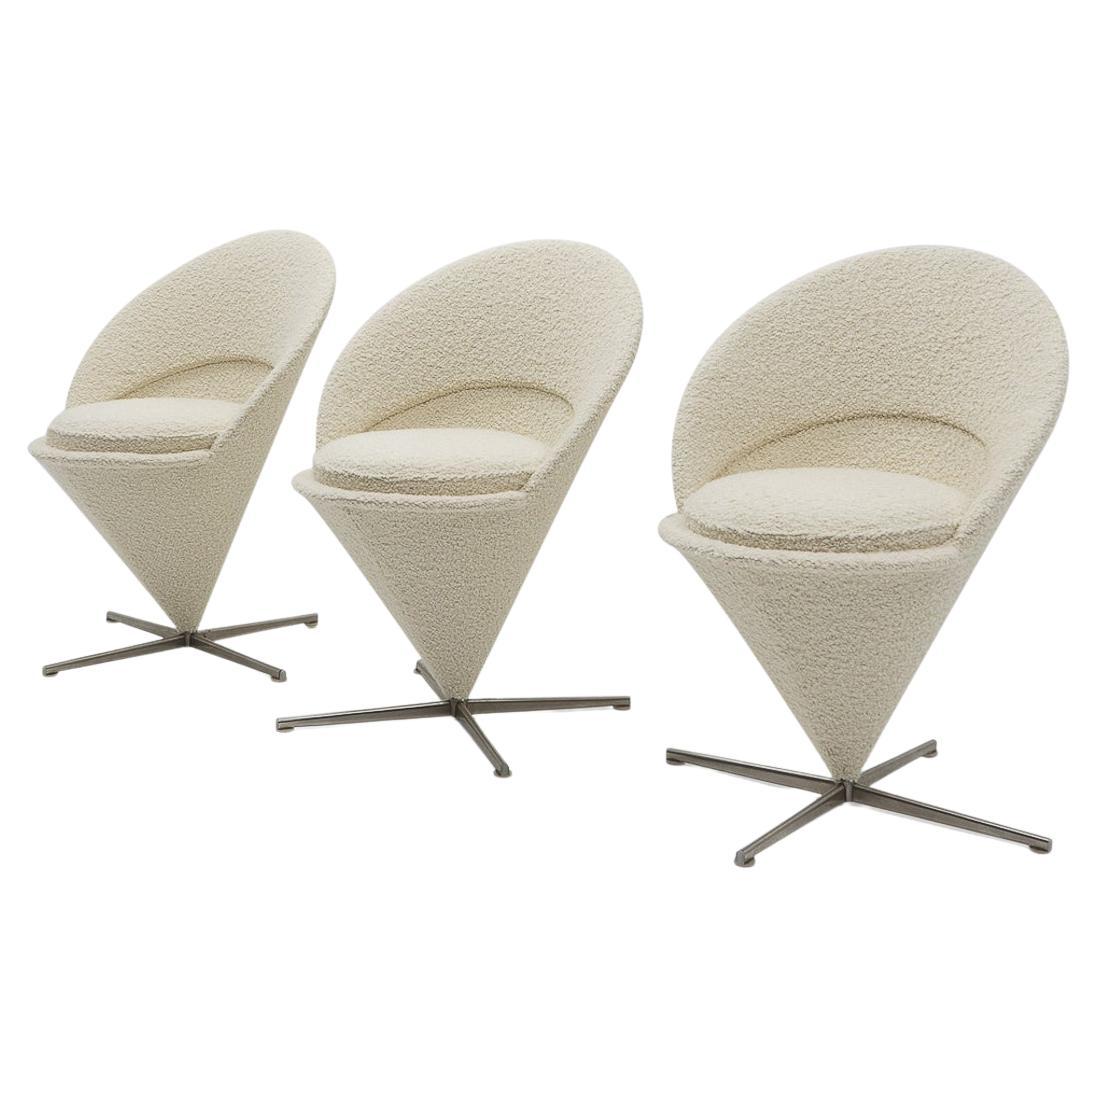 Design Classic Verner Panton Cone Chairs, Vitra, 2000s